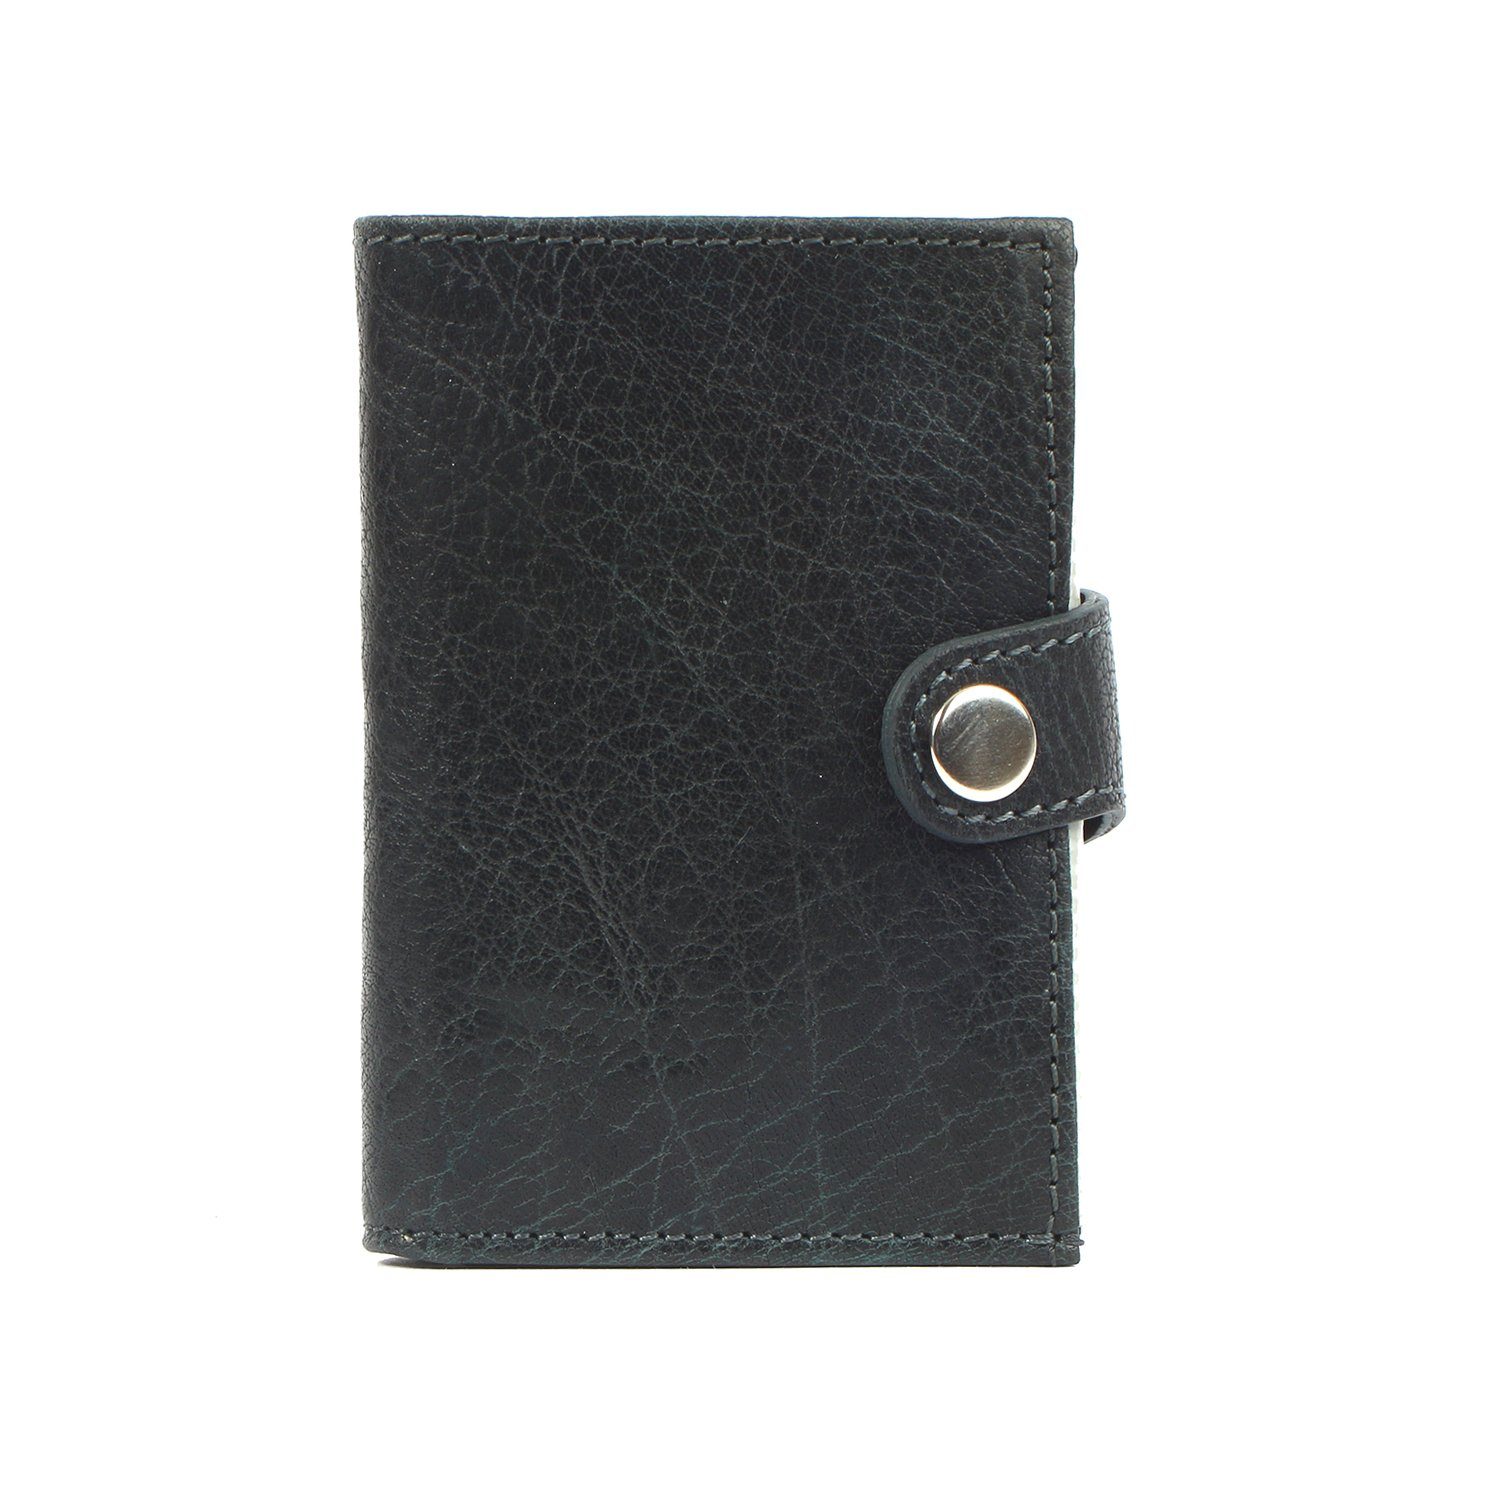 Margelisch Mini Kreditkartenbörse Geldbörse noonyu Leder leather, aus single Upcycling